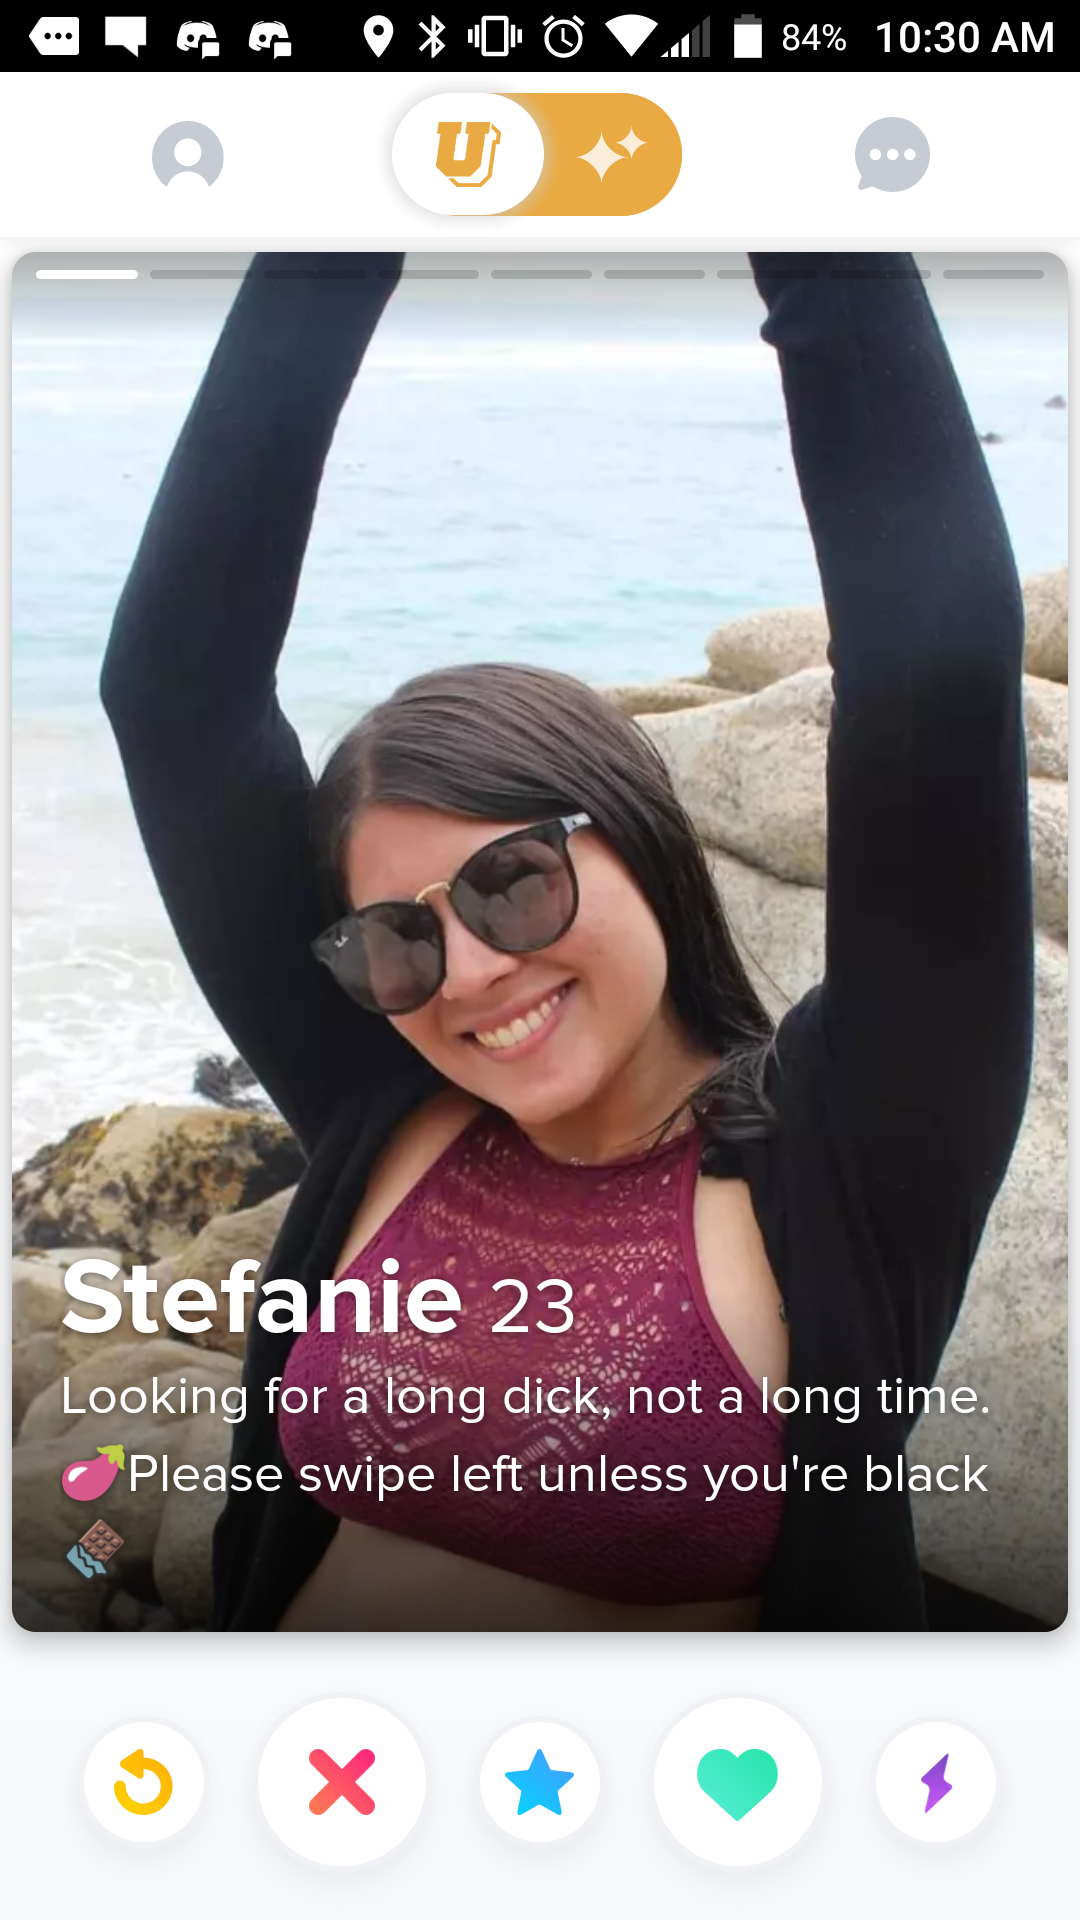 selfie - C 0 00 84% Stefanie 23 Looking for a long dick, not a long time. Please swipe left unless you're black